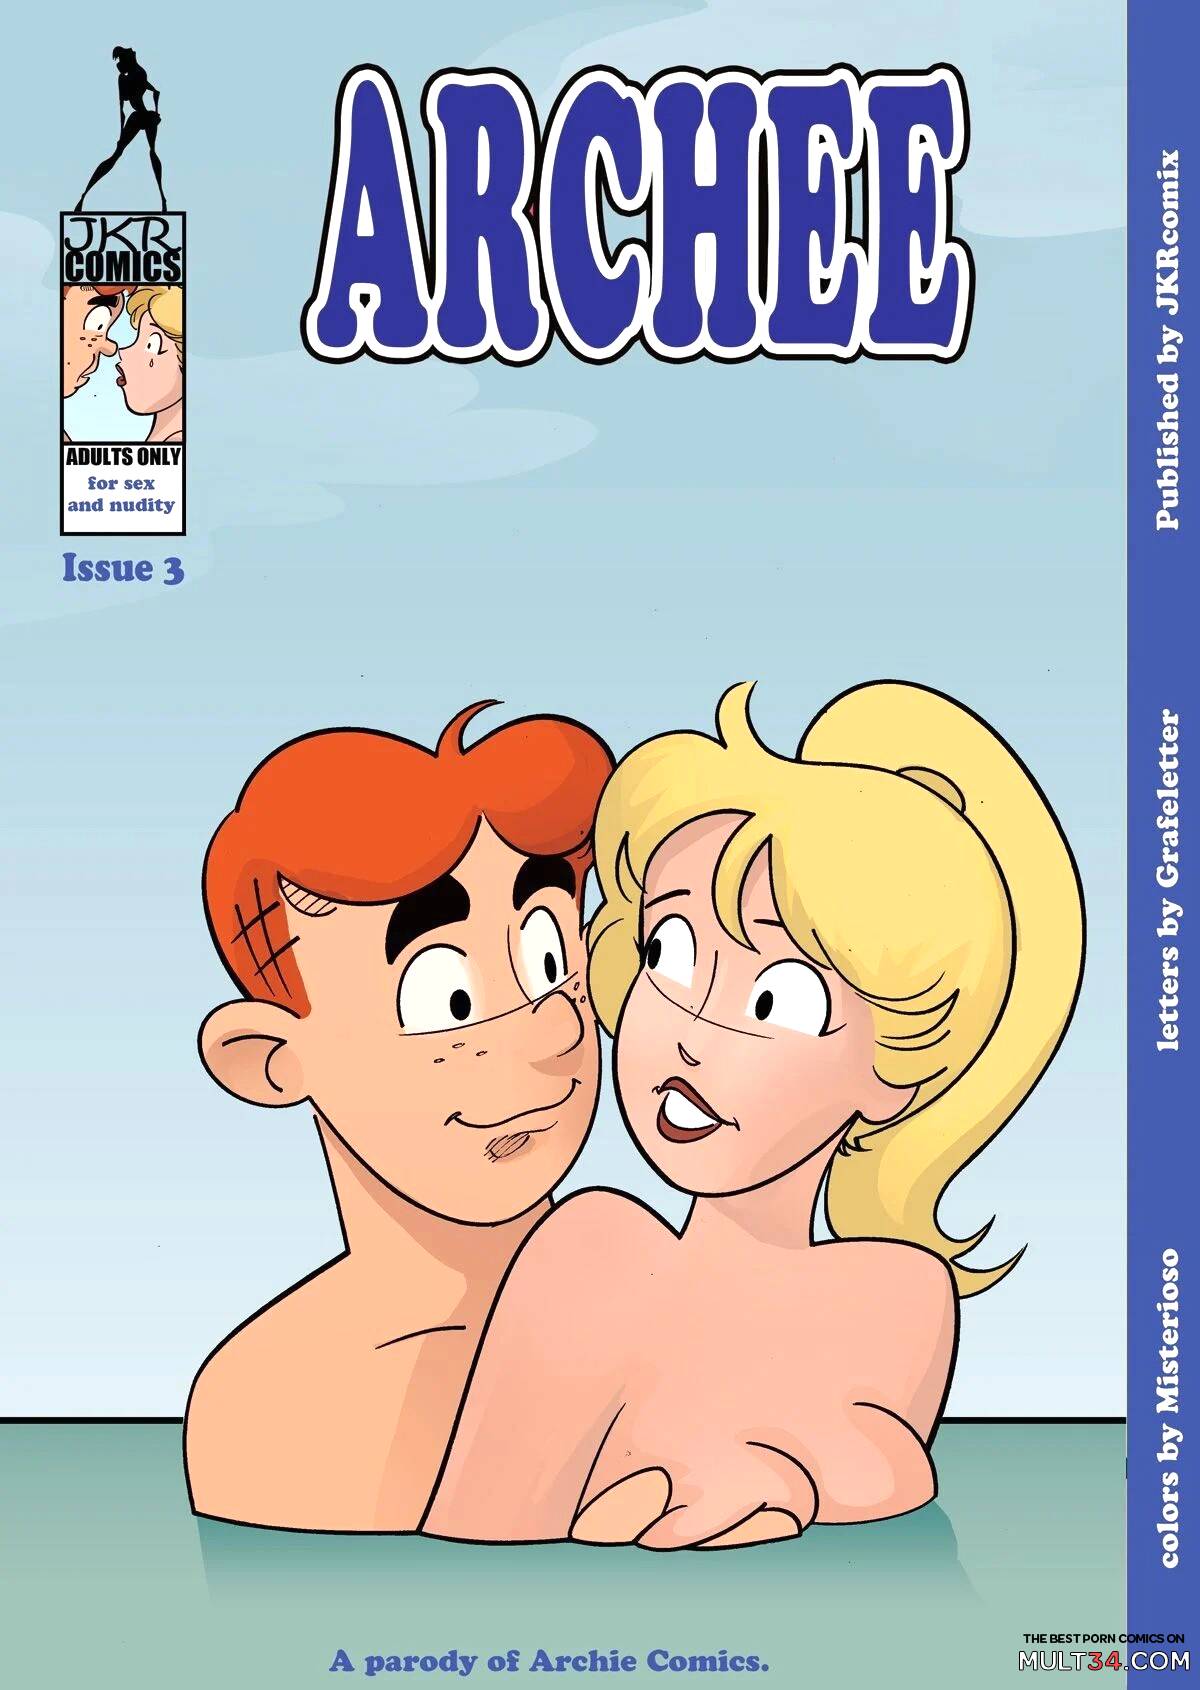 Animated archie comics porn